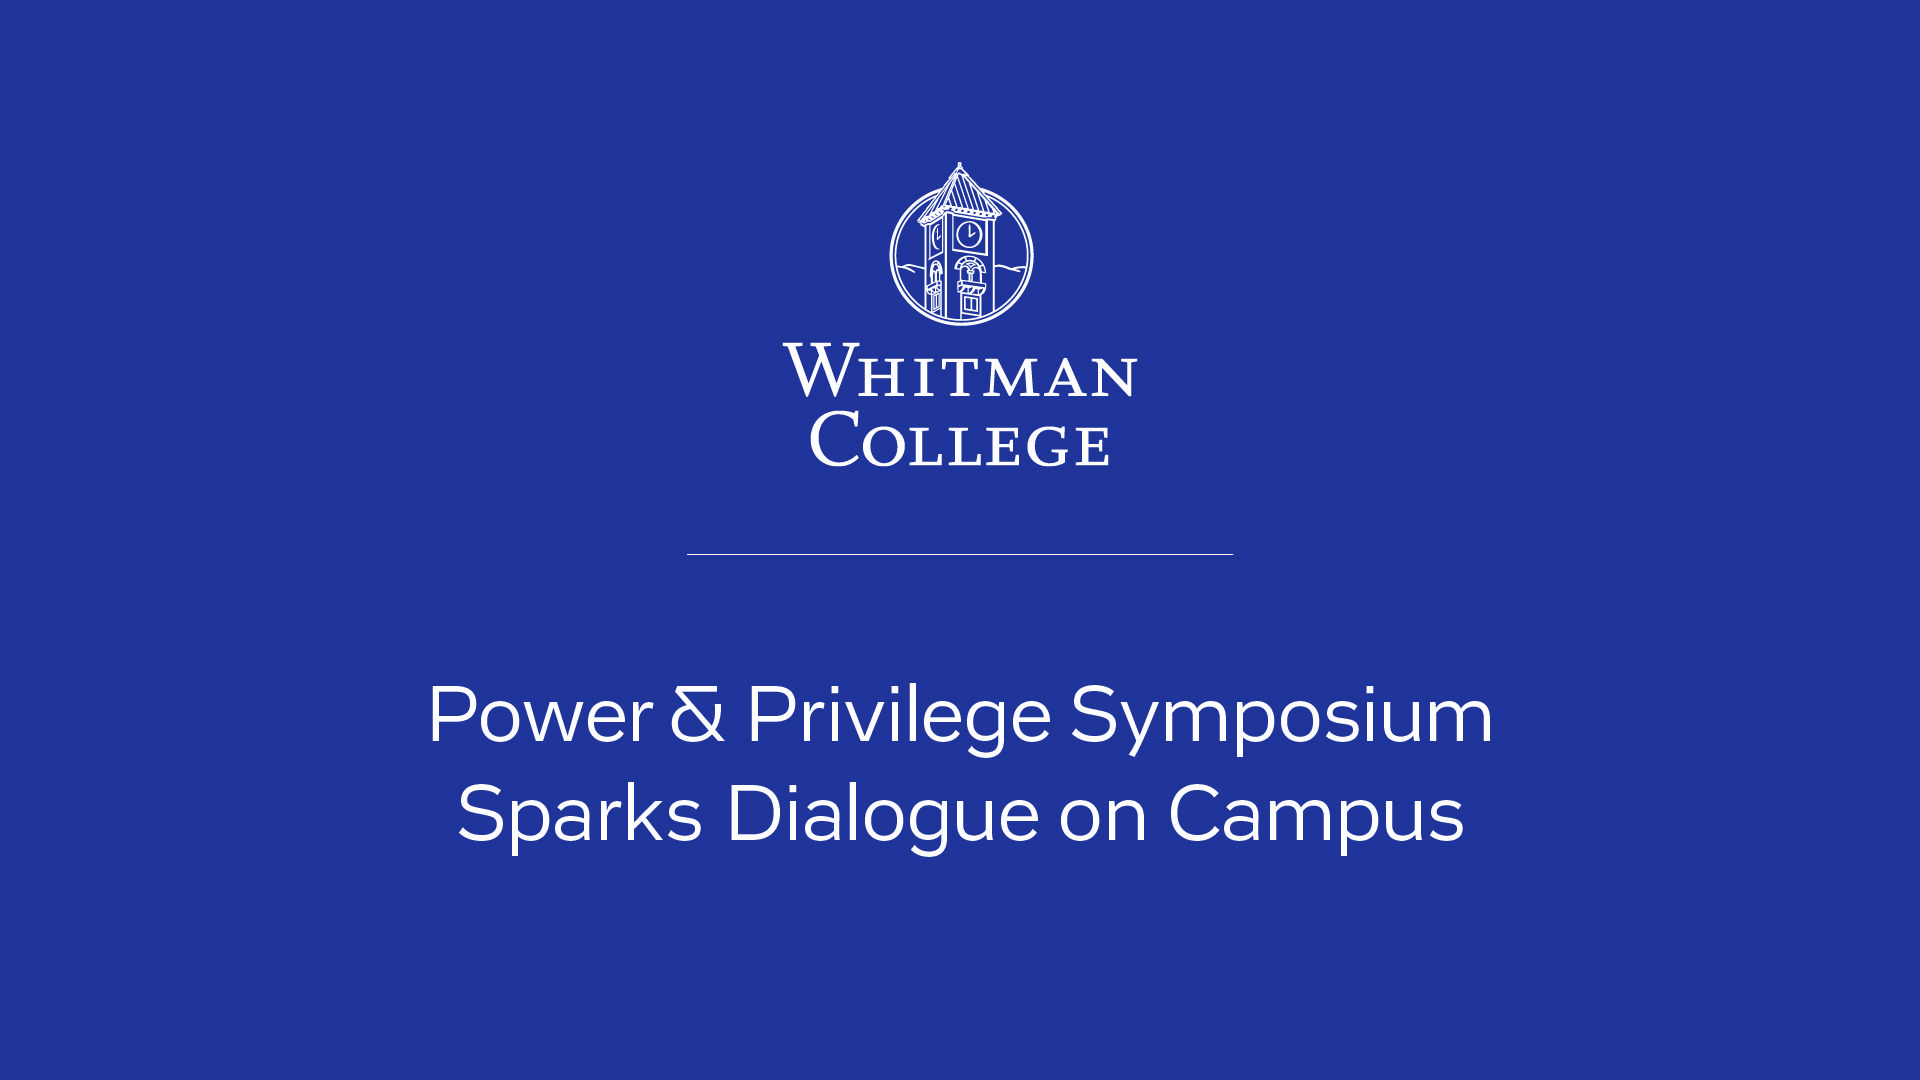 Video - Power and Privilege Symposium